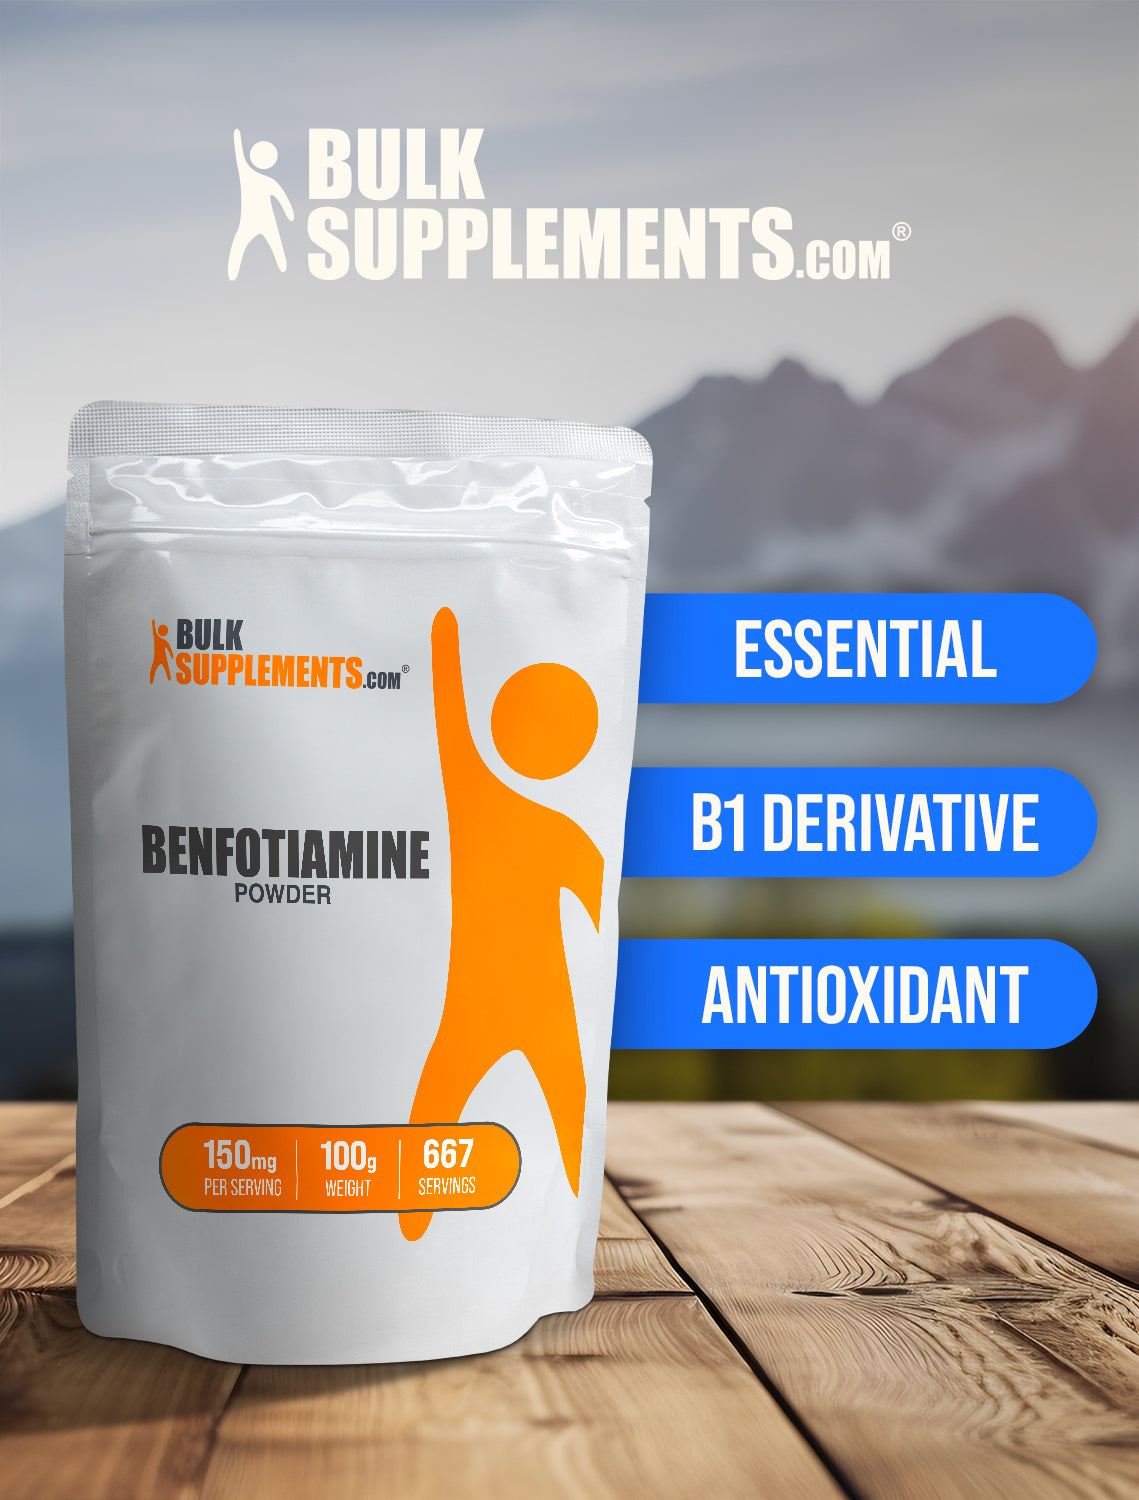 Benfotiamine powder label 100g